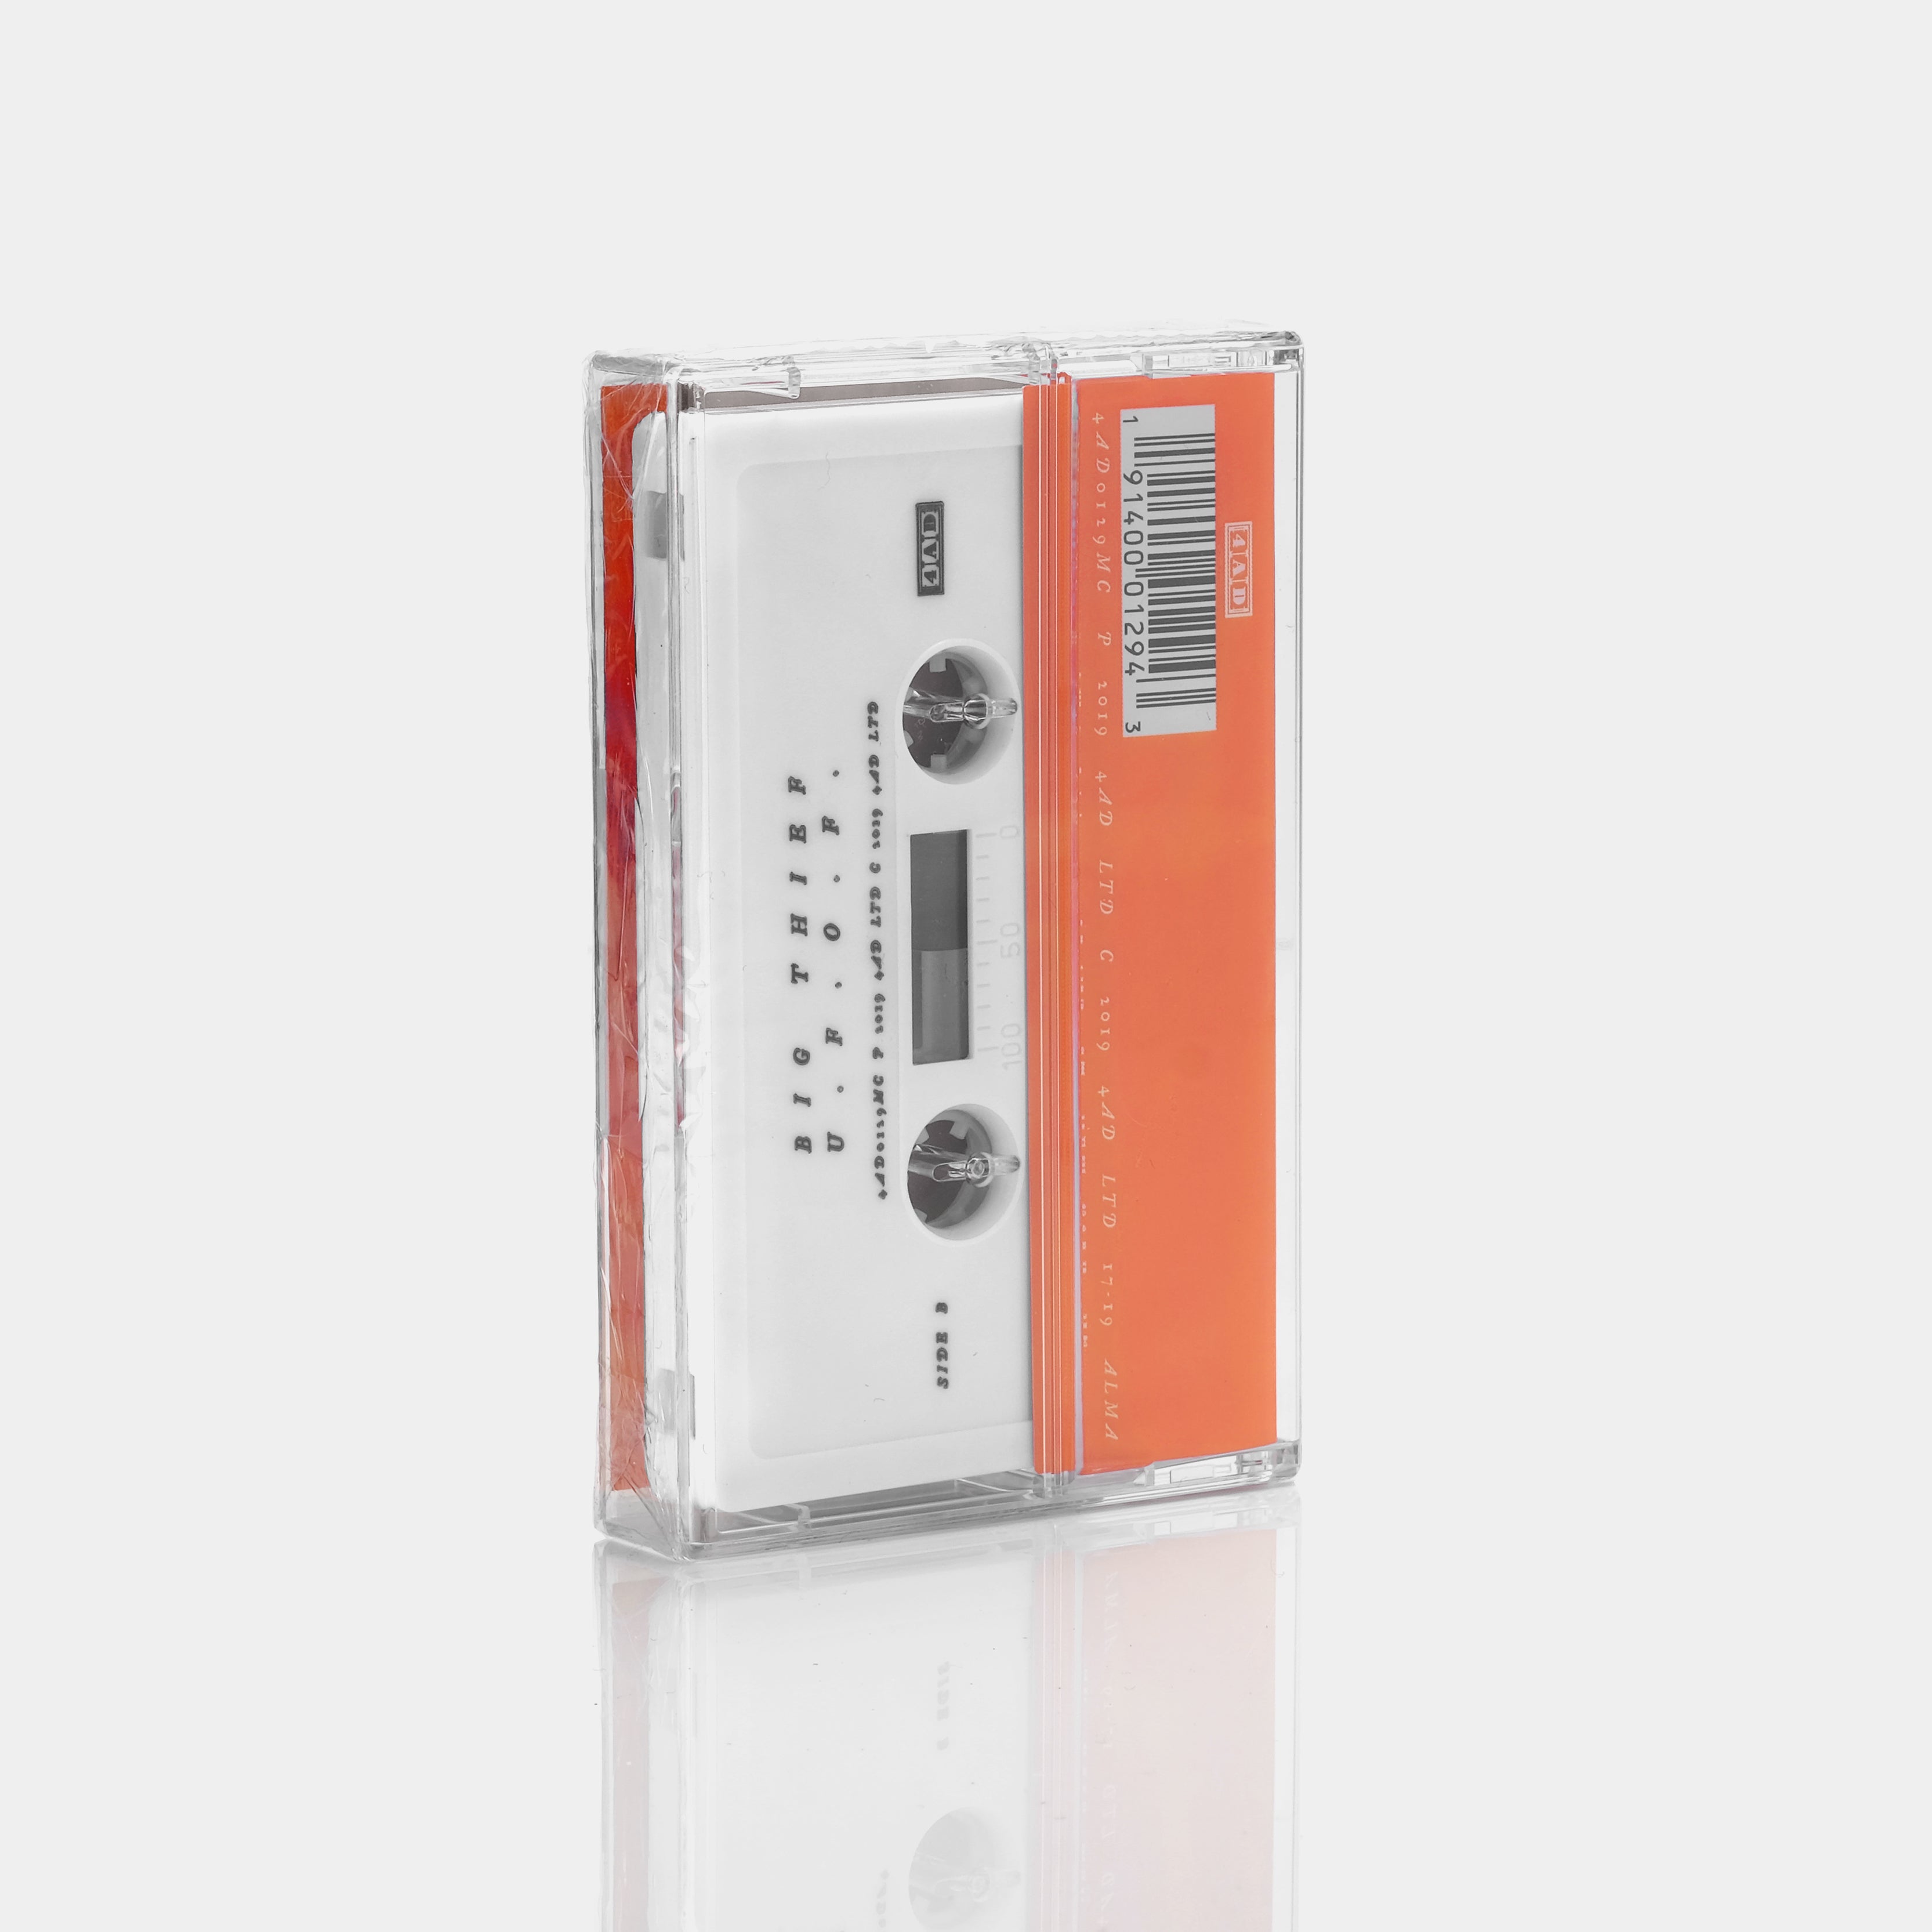 Big Thief - U.F.O.F. Cassette Tape